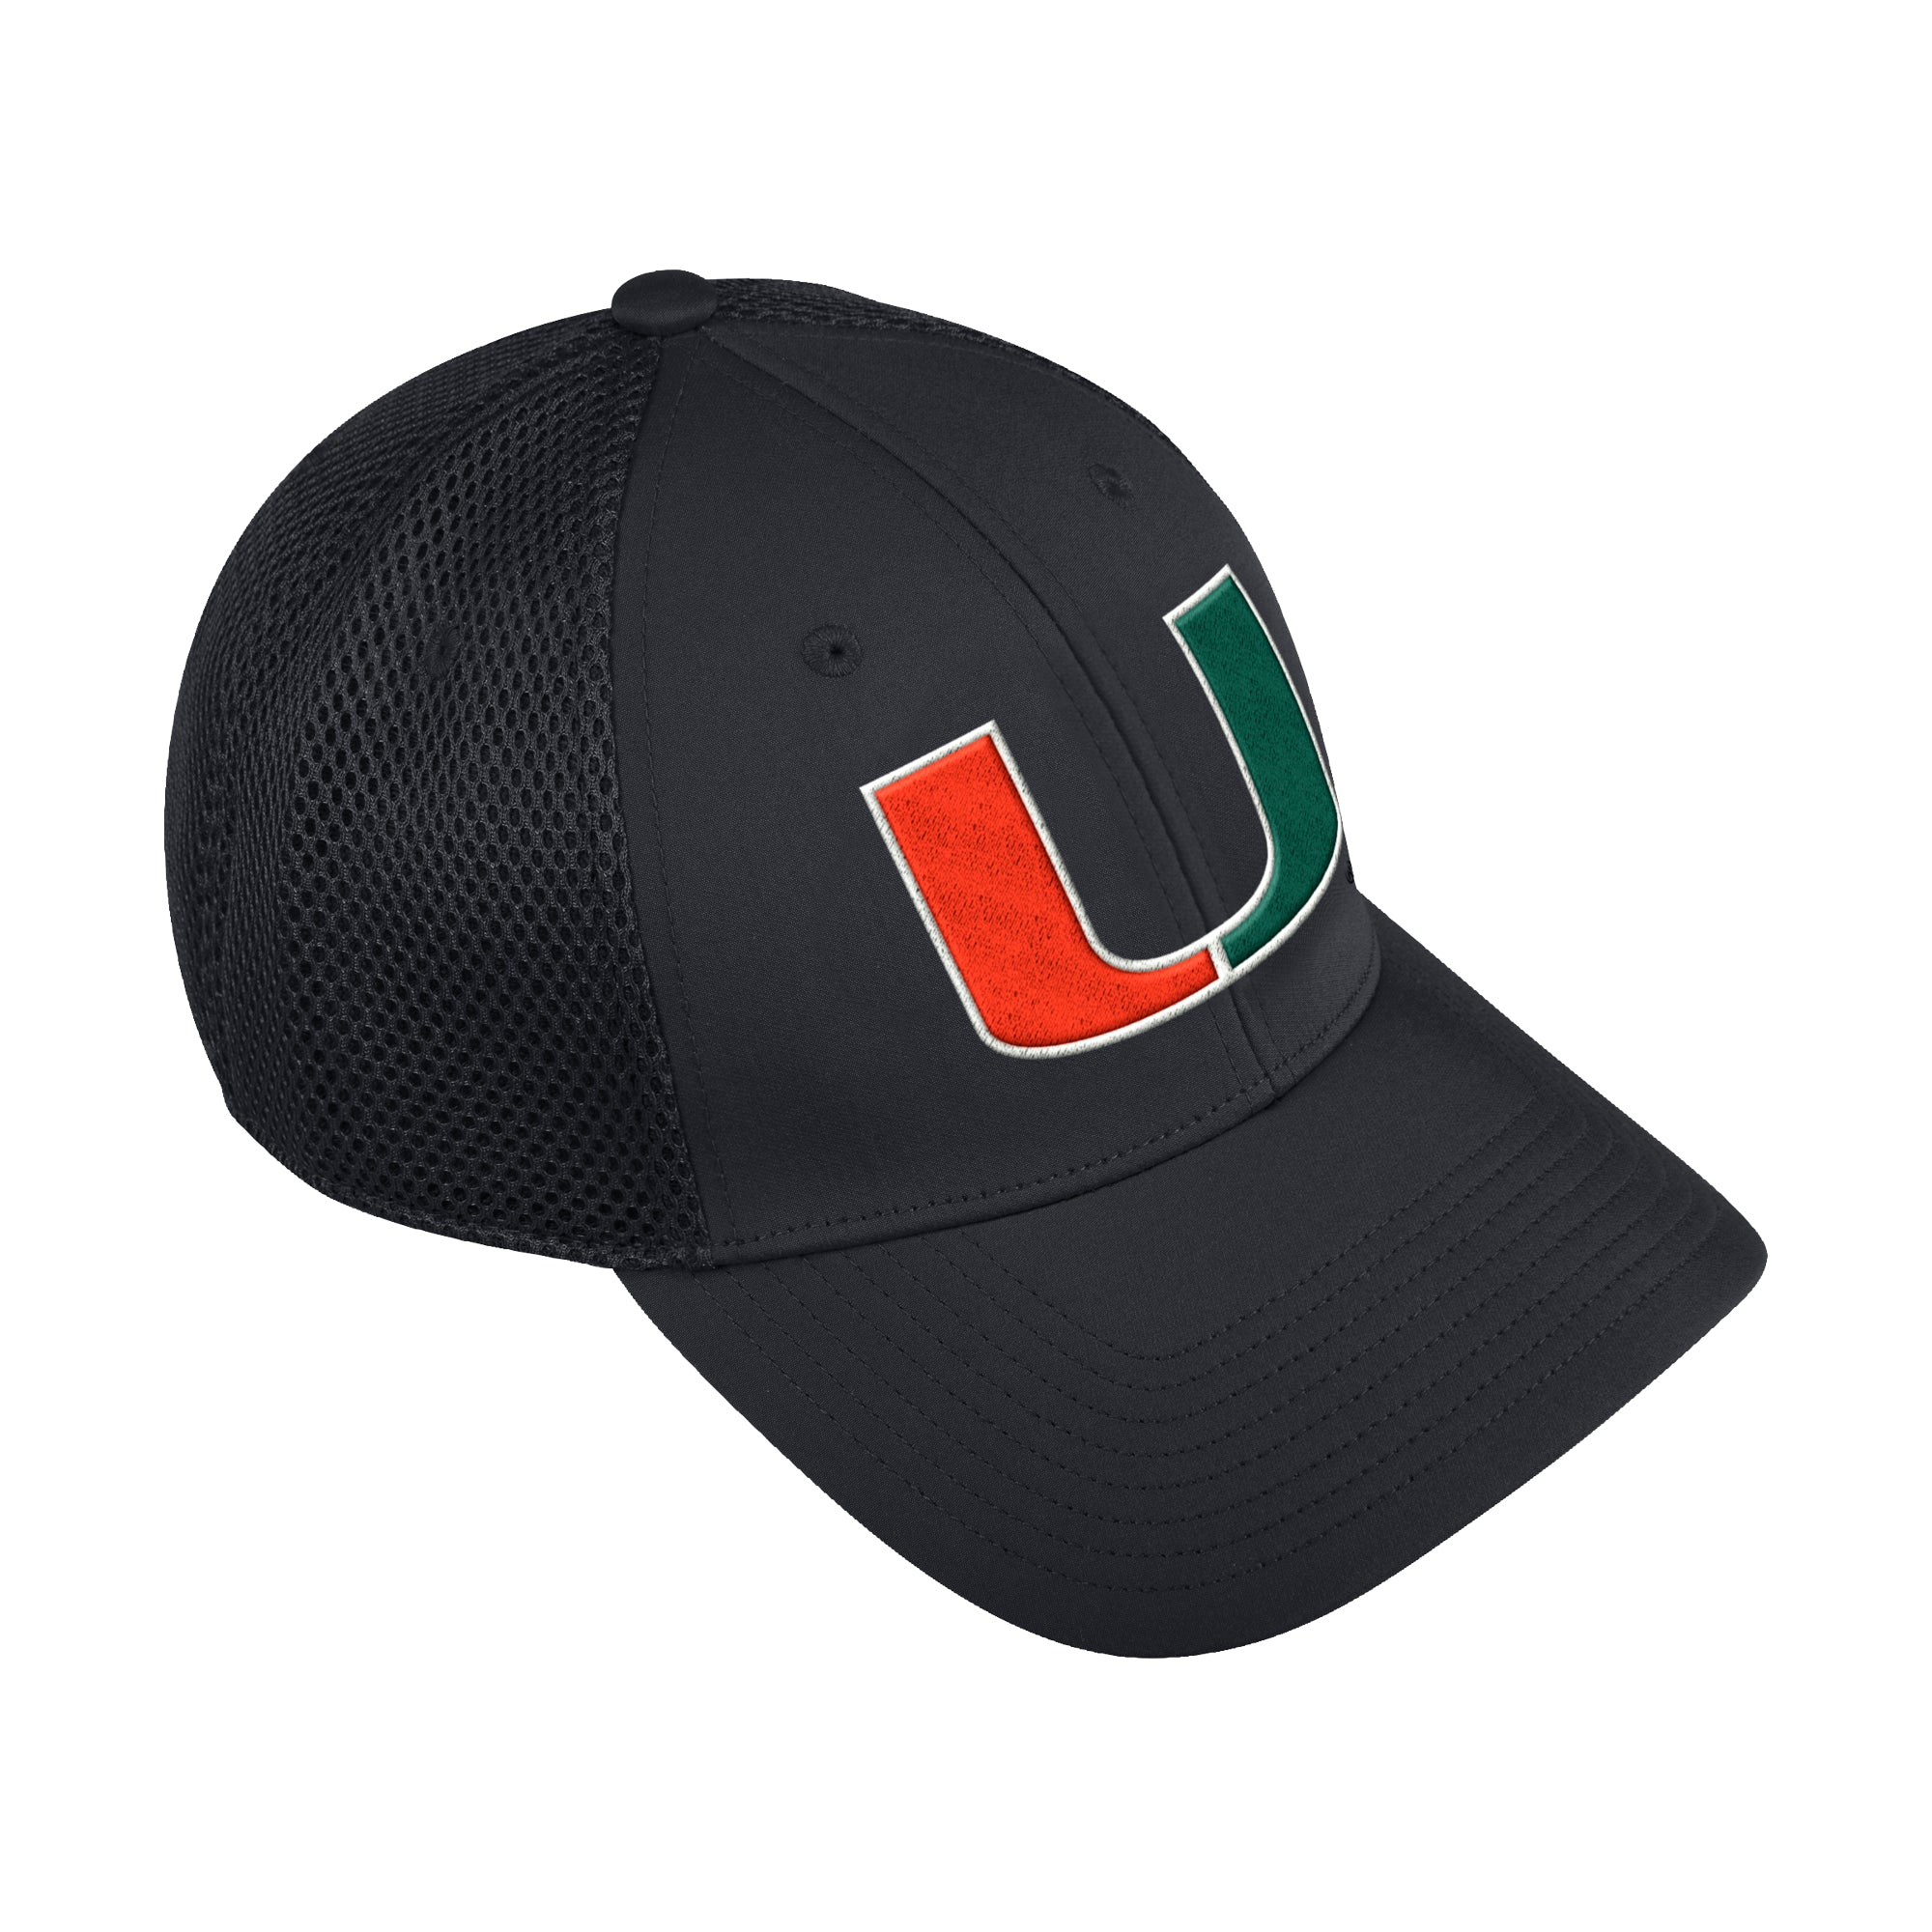 Miami Hurricanes adidas Coaches Mesh Structured Adjustable Hat - Black